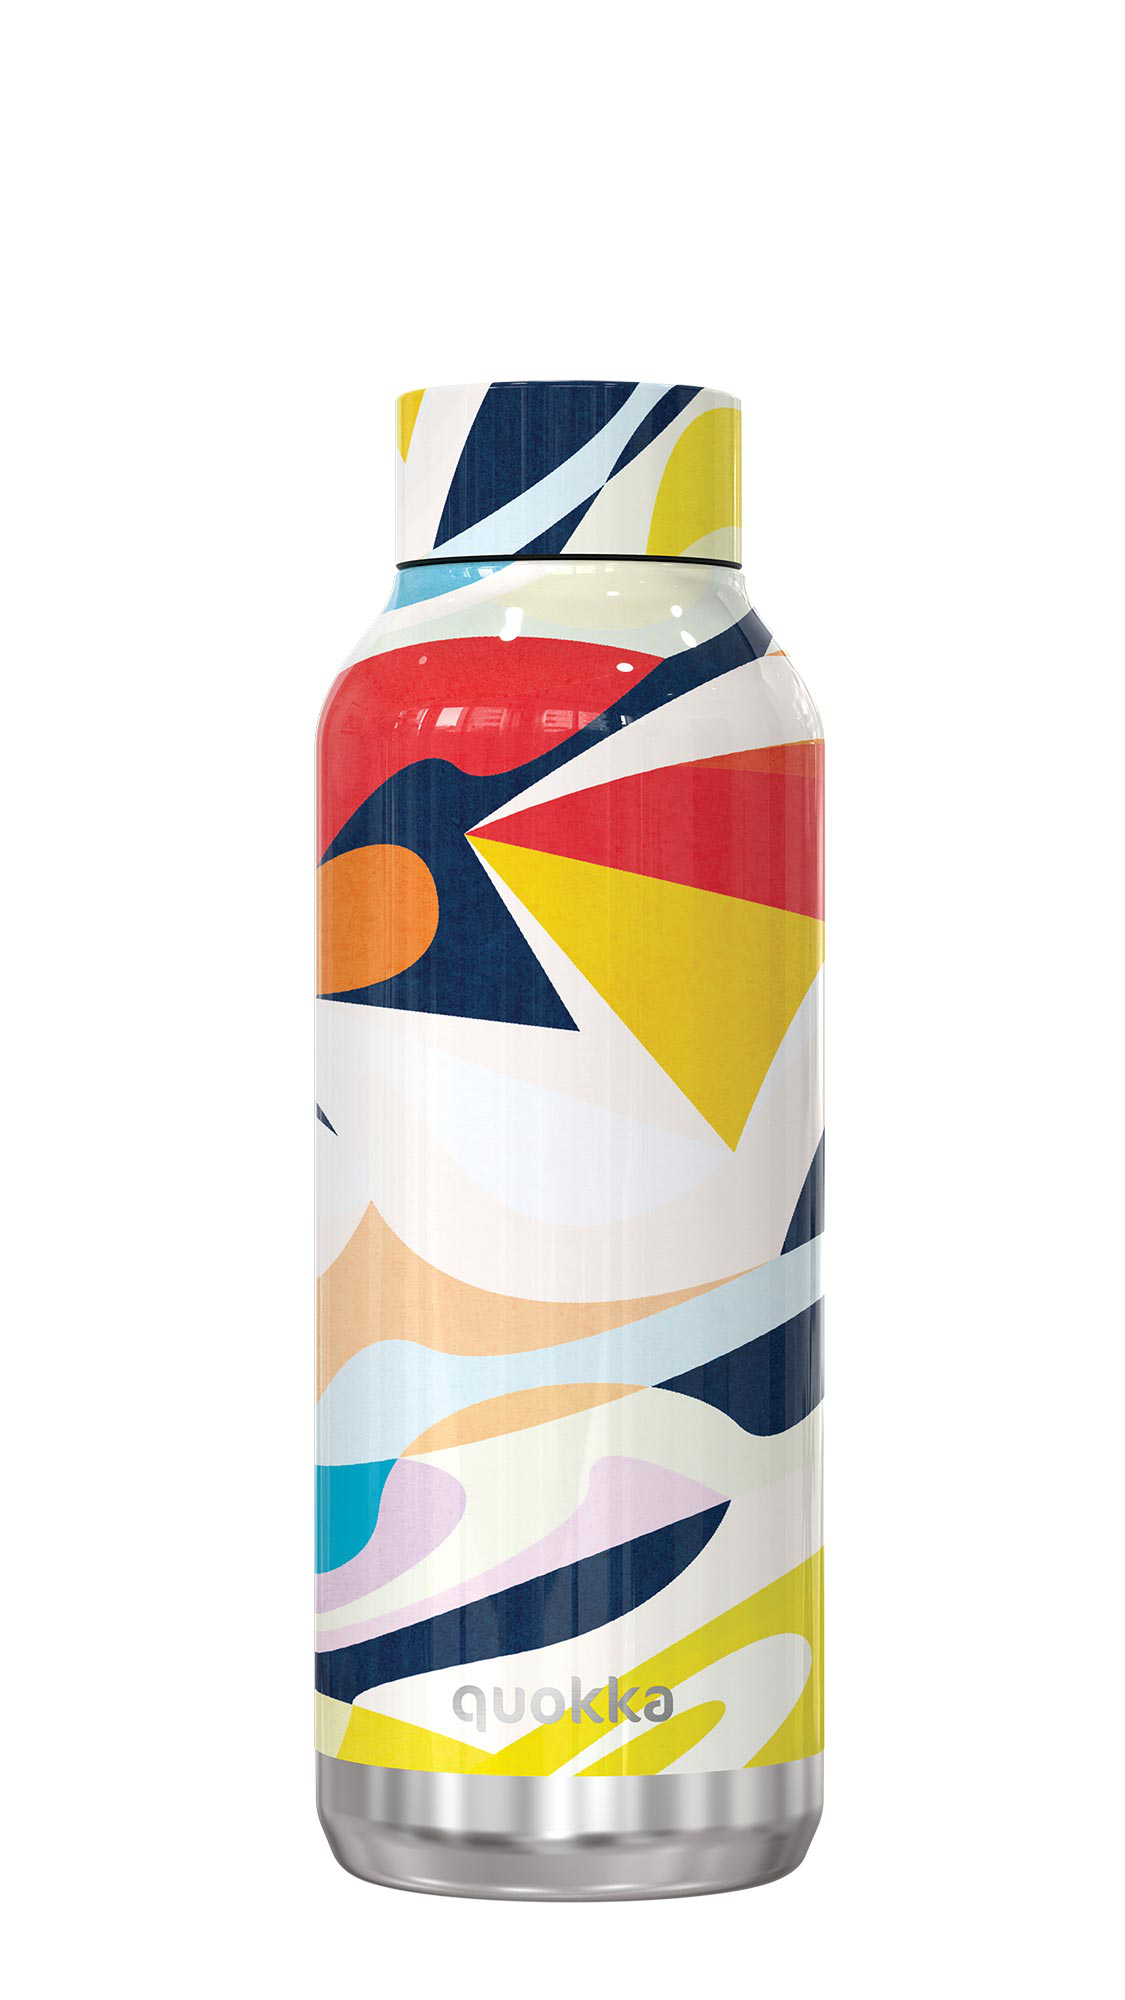 Quokka Botella Acero Inoxidable Solid Tropical 510ml (st12) - Regaliz  Distribuciones Español